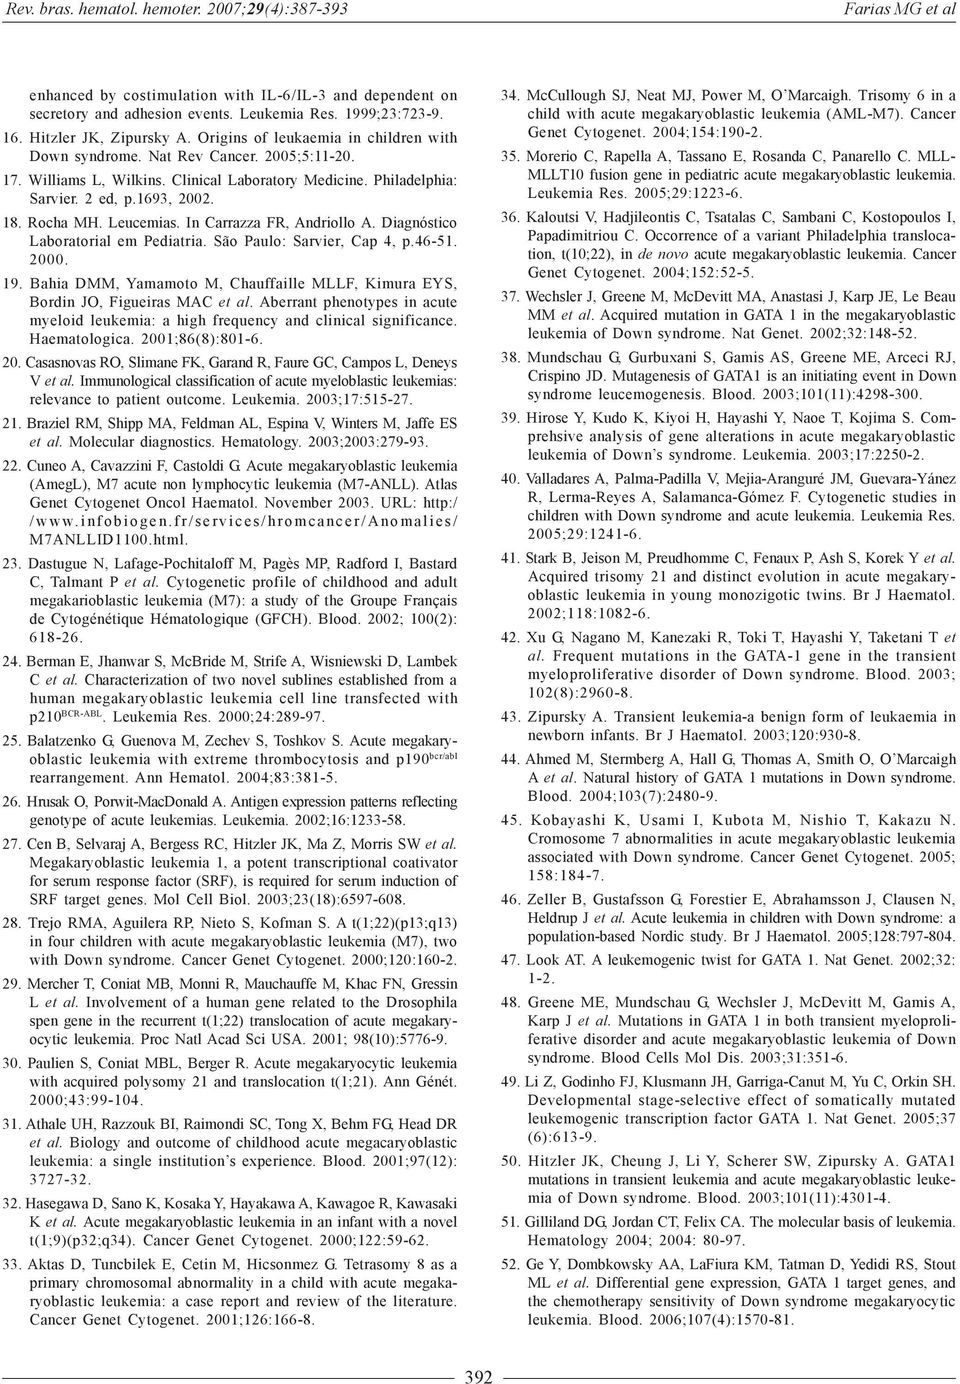 1693, 2002. 18. Rocha MH. Leucemias. In Carrazza FR, Andriollo A. Diagnóstico Laboratorial em Pediatria. São Paulo: Sarvier, Cap 4, p.46-51. 2000. 19.